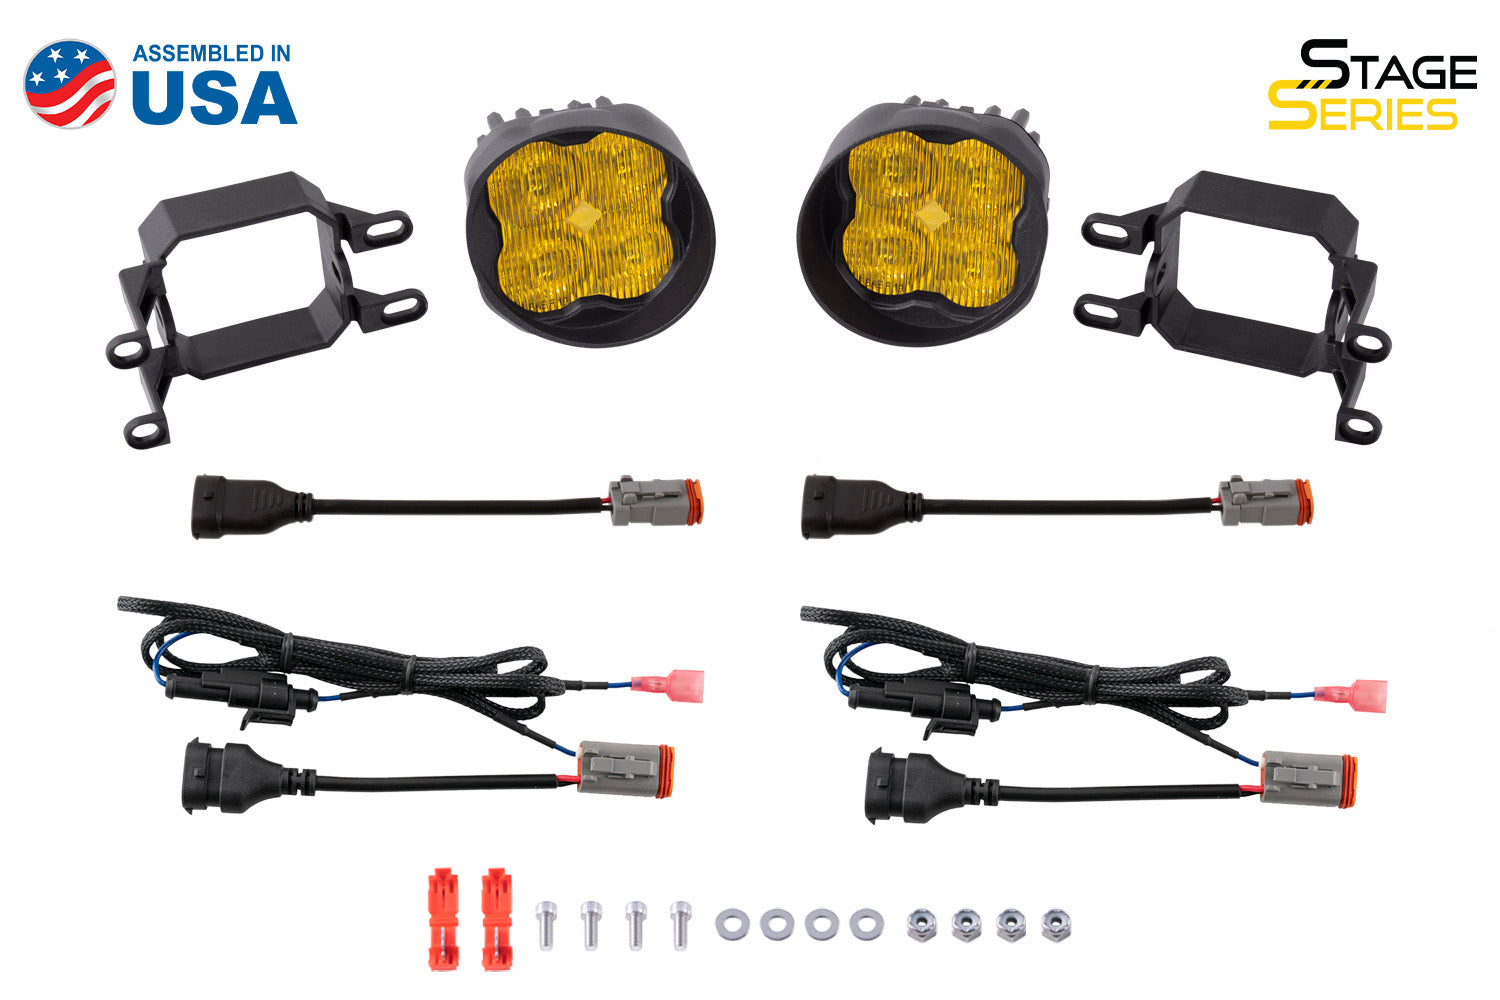 SS3 LED Fog Light Kit for 2009-2014 Toyota Venza Yellow SAE Fog Max Diode Dynamics